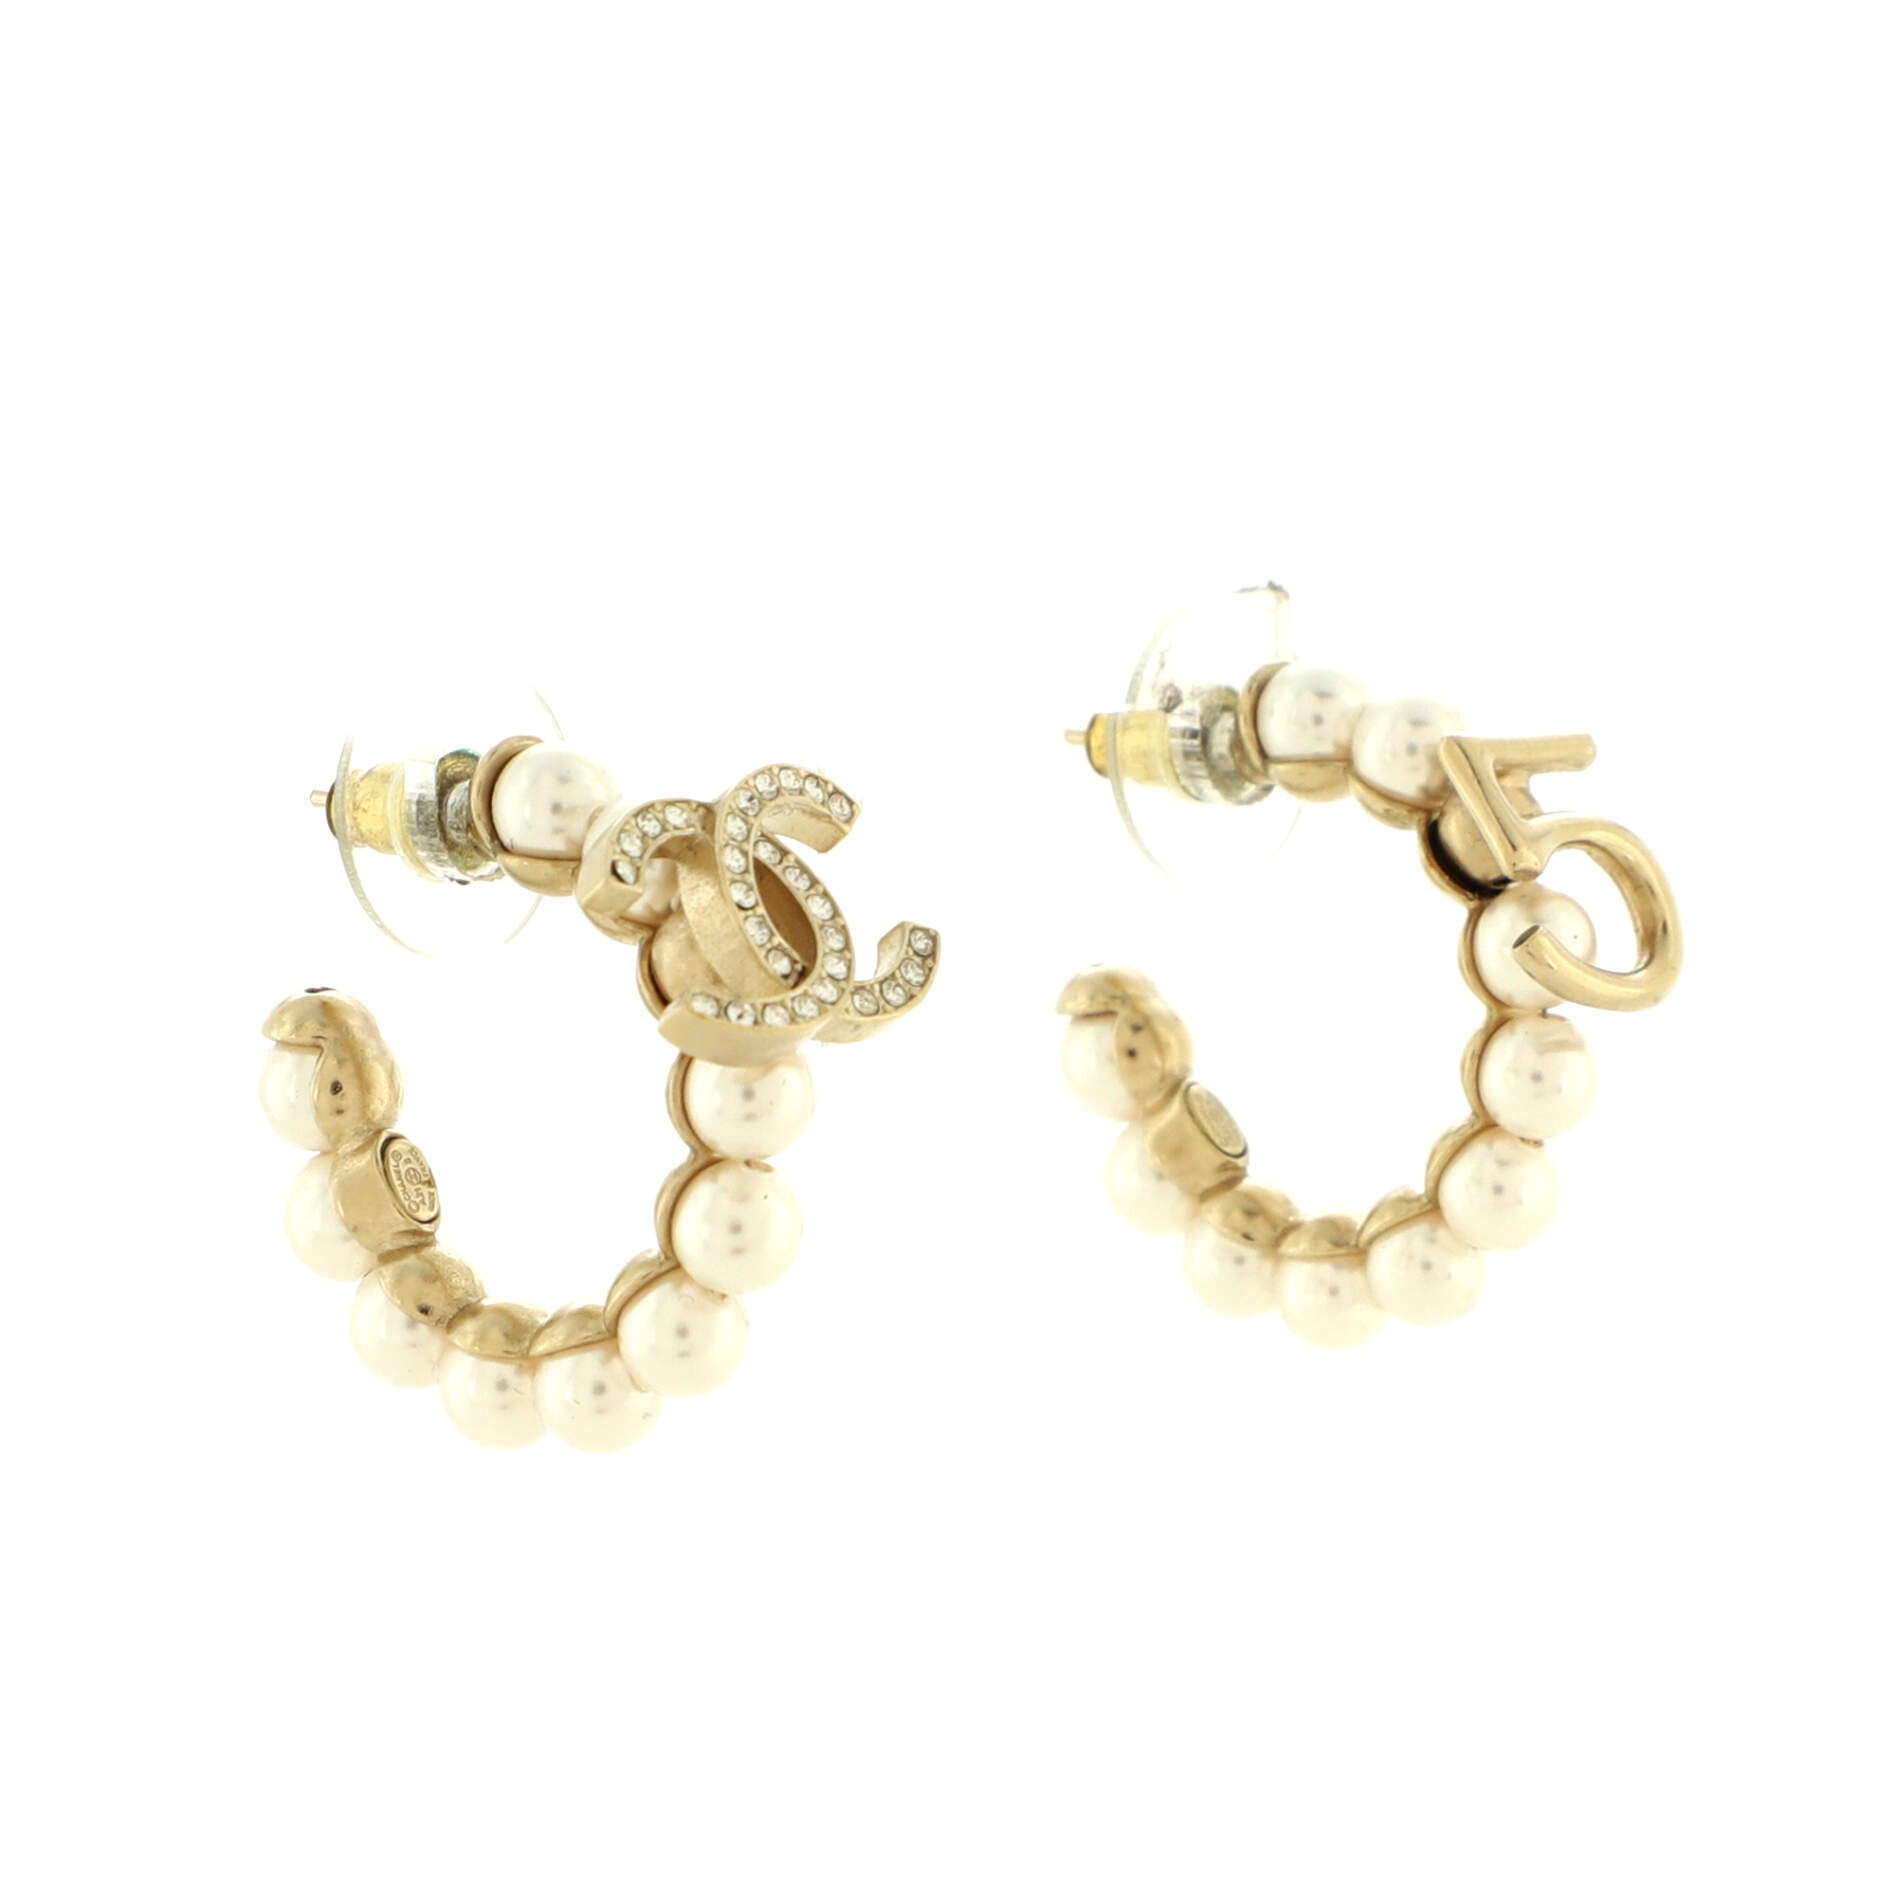 Gold Metal and Imitation Pearl CC Medallion Stud Earrings, 2020